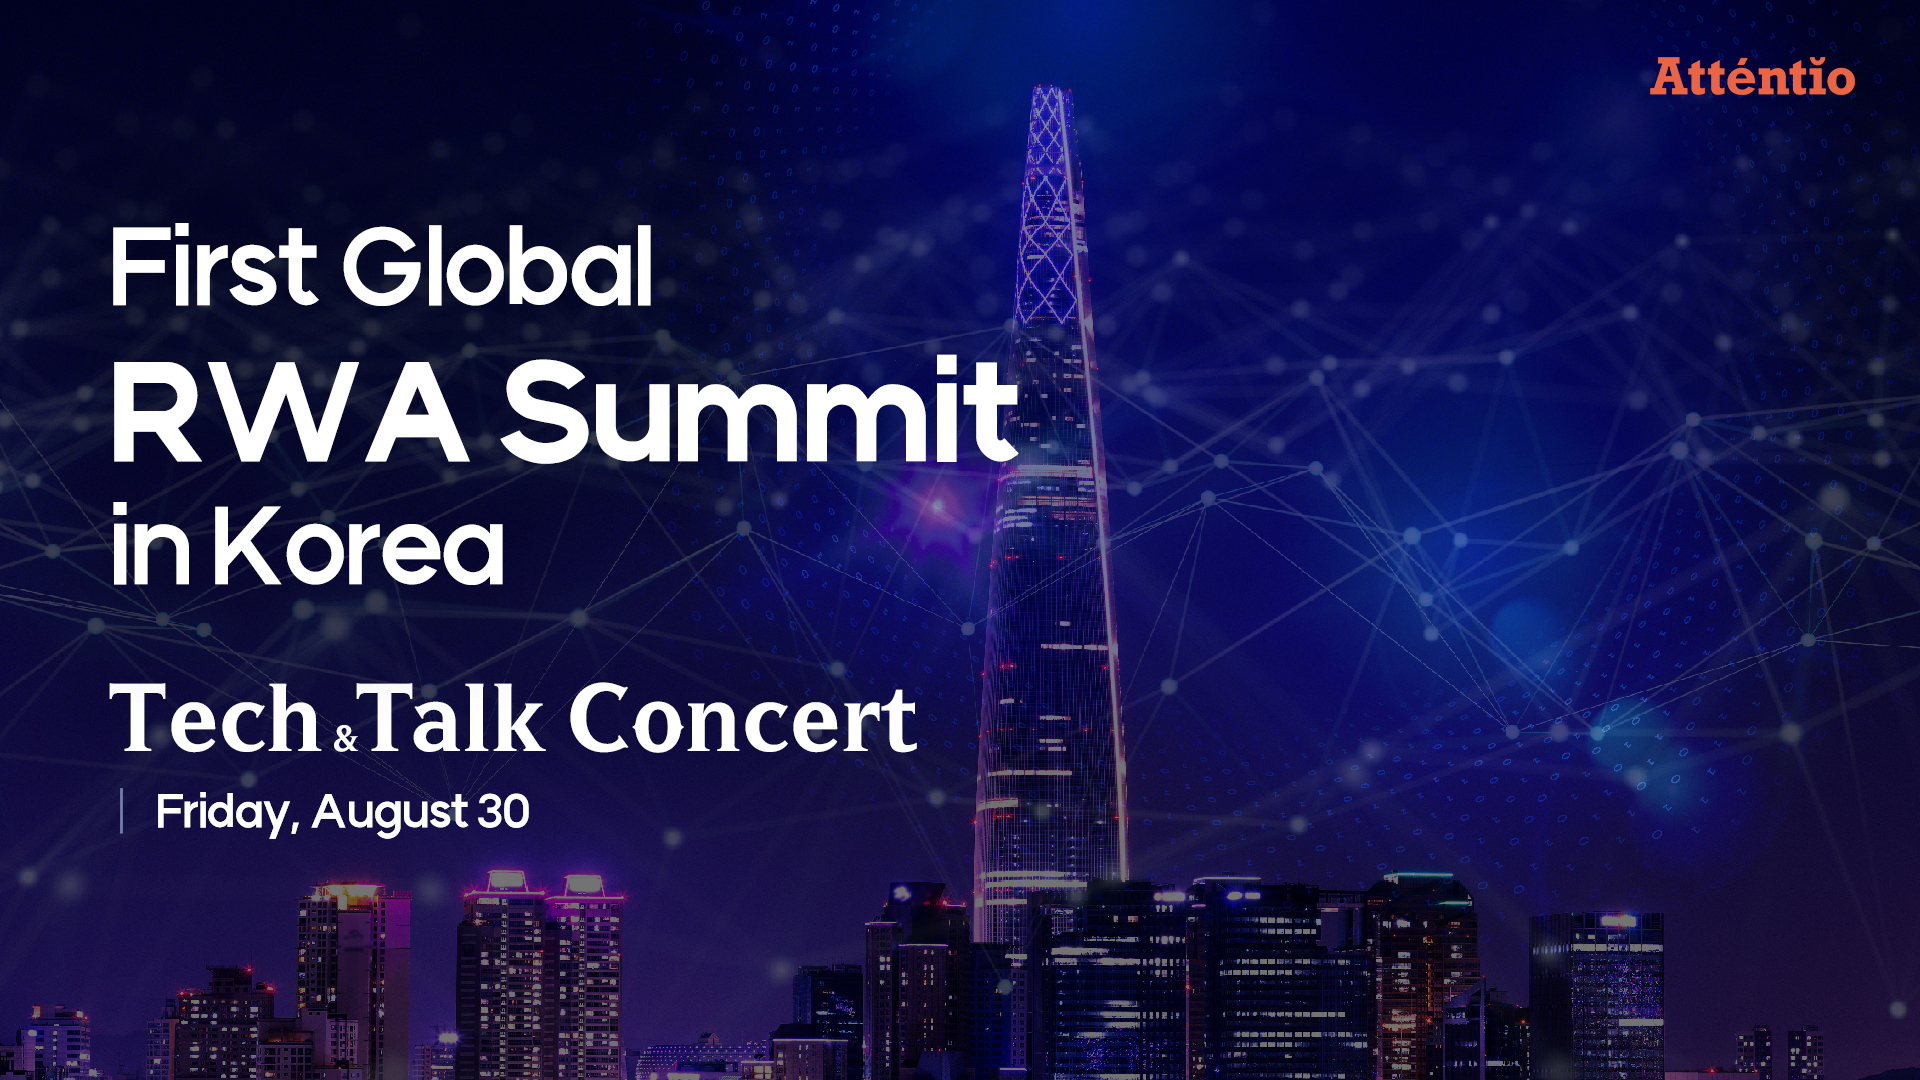 Tech & Talk Concert on RWA to be held in Korea